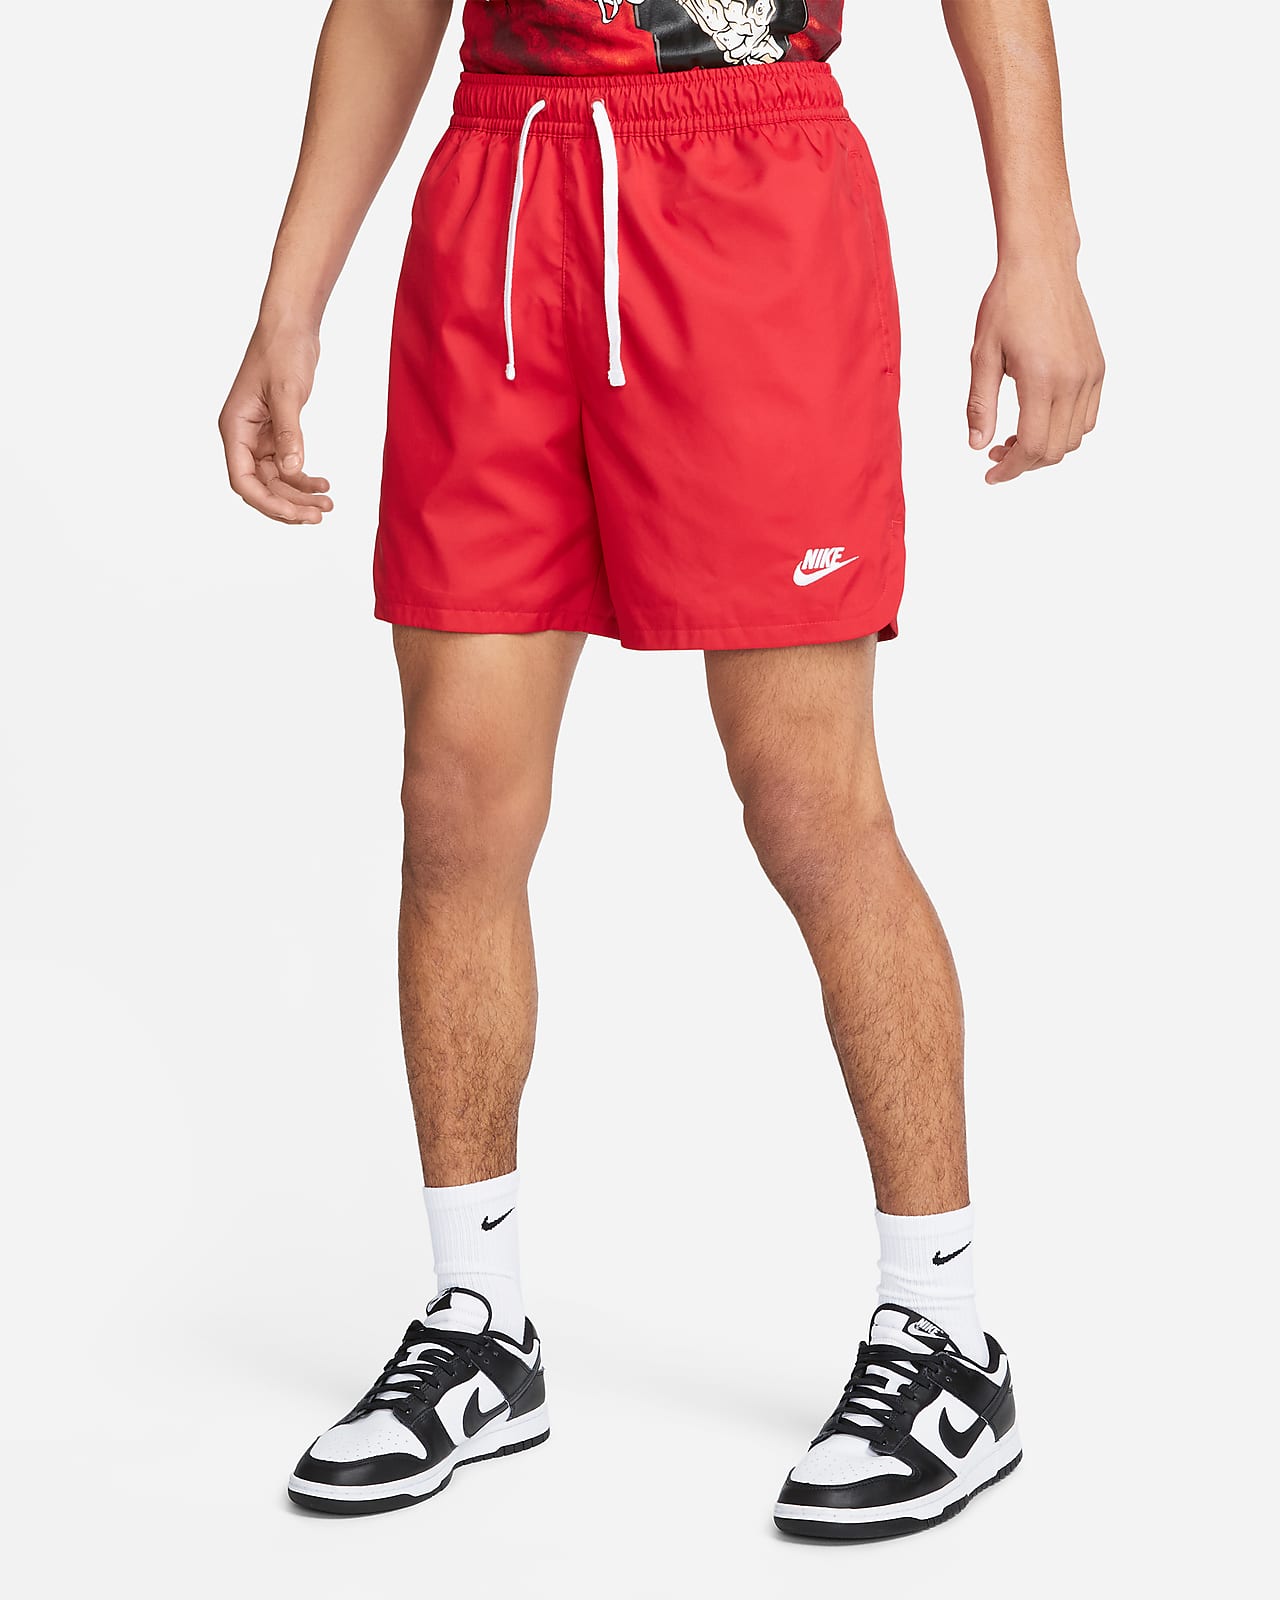 Shorts Flow in tessuto con fodera Nike Sportswear Sport Essentials - Uomo